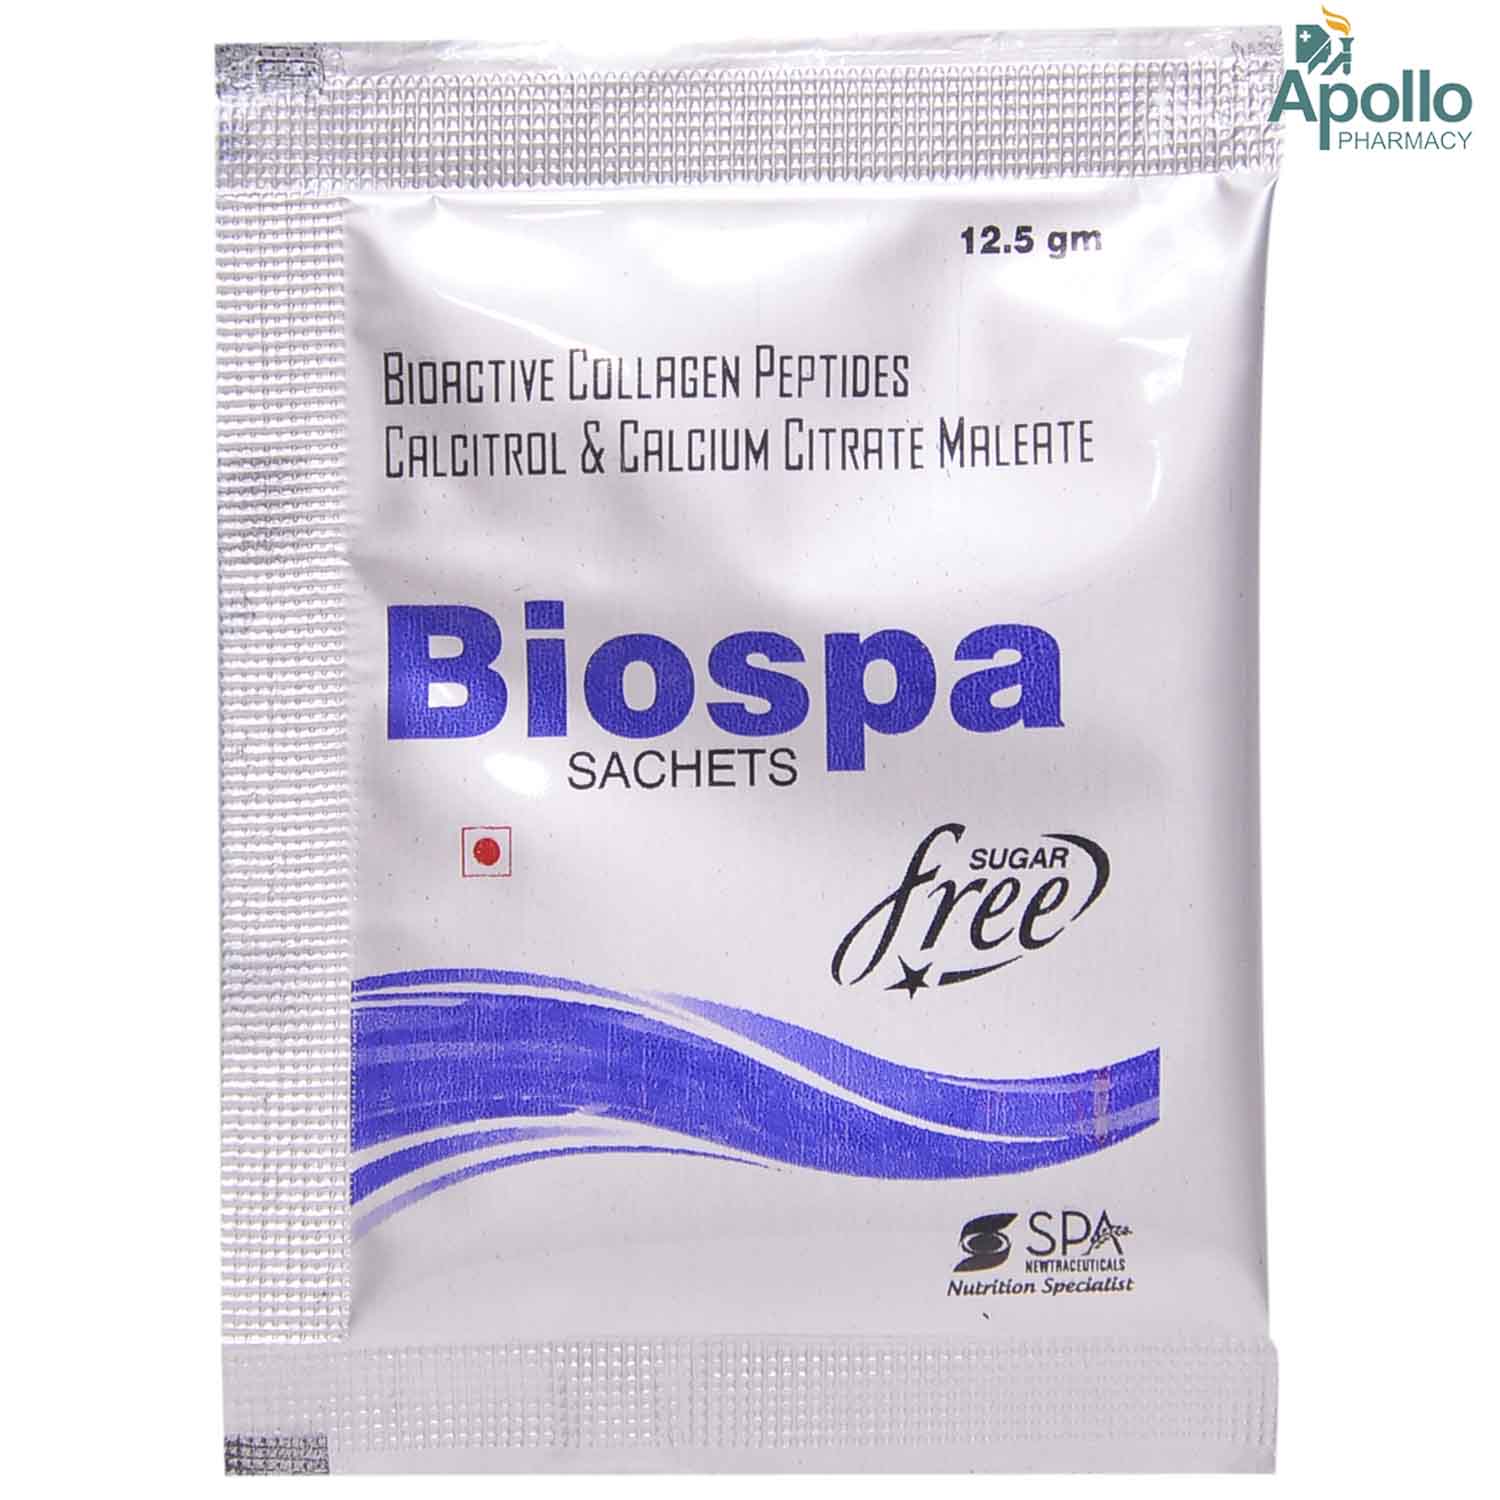 BIOSPA SACHETS 12.5G, Pack of 1 Powder